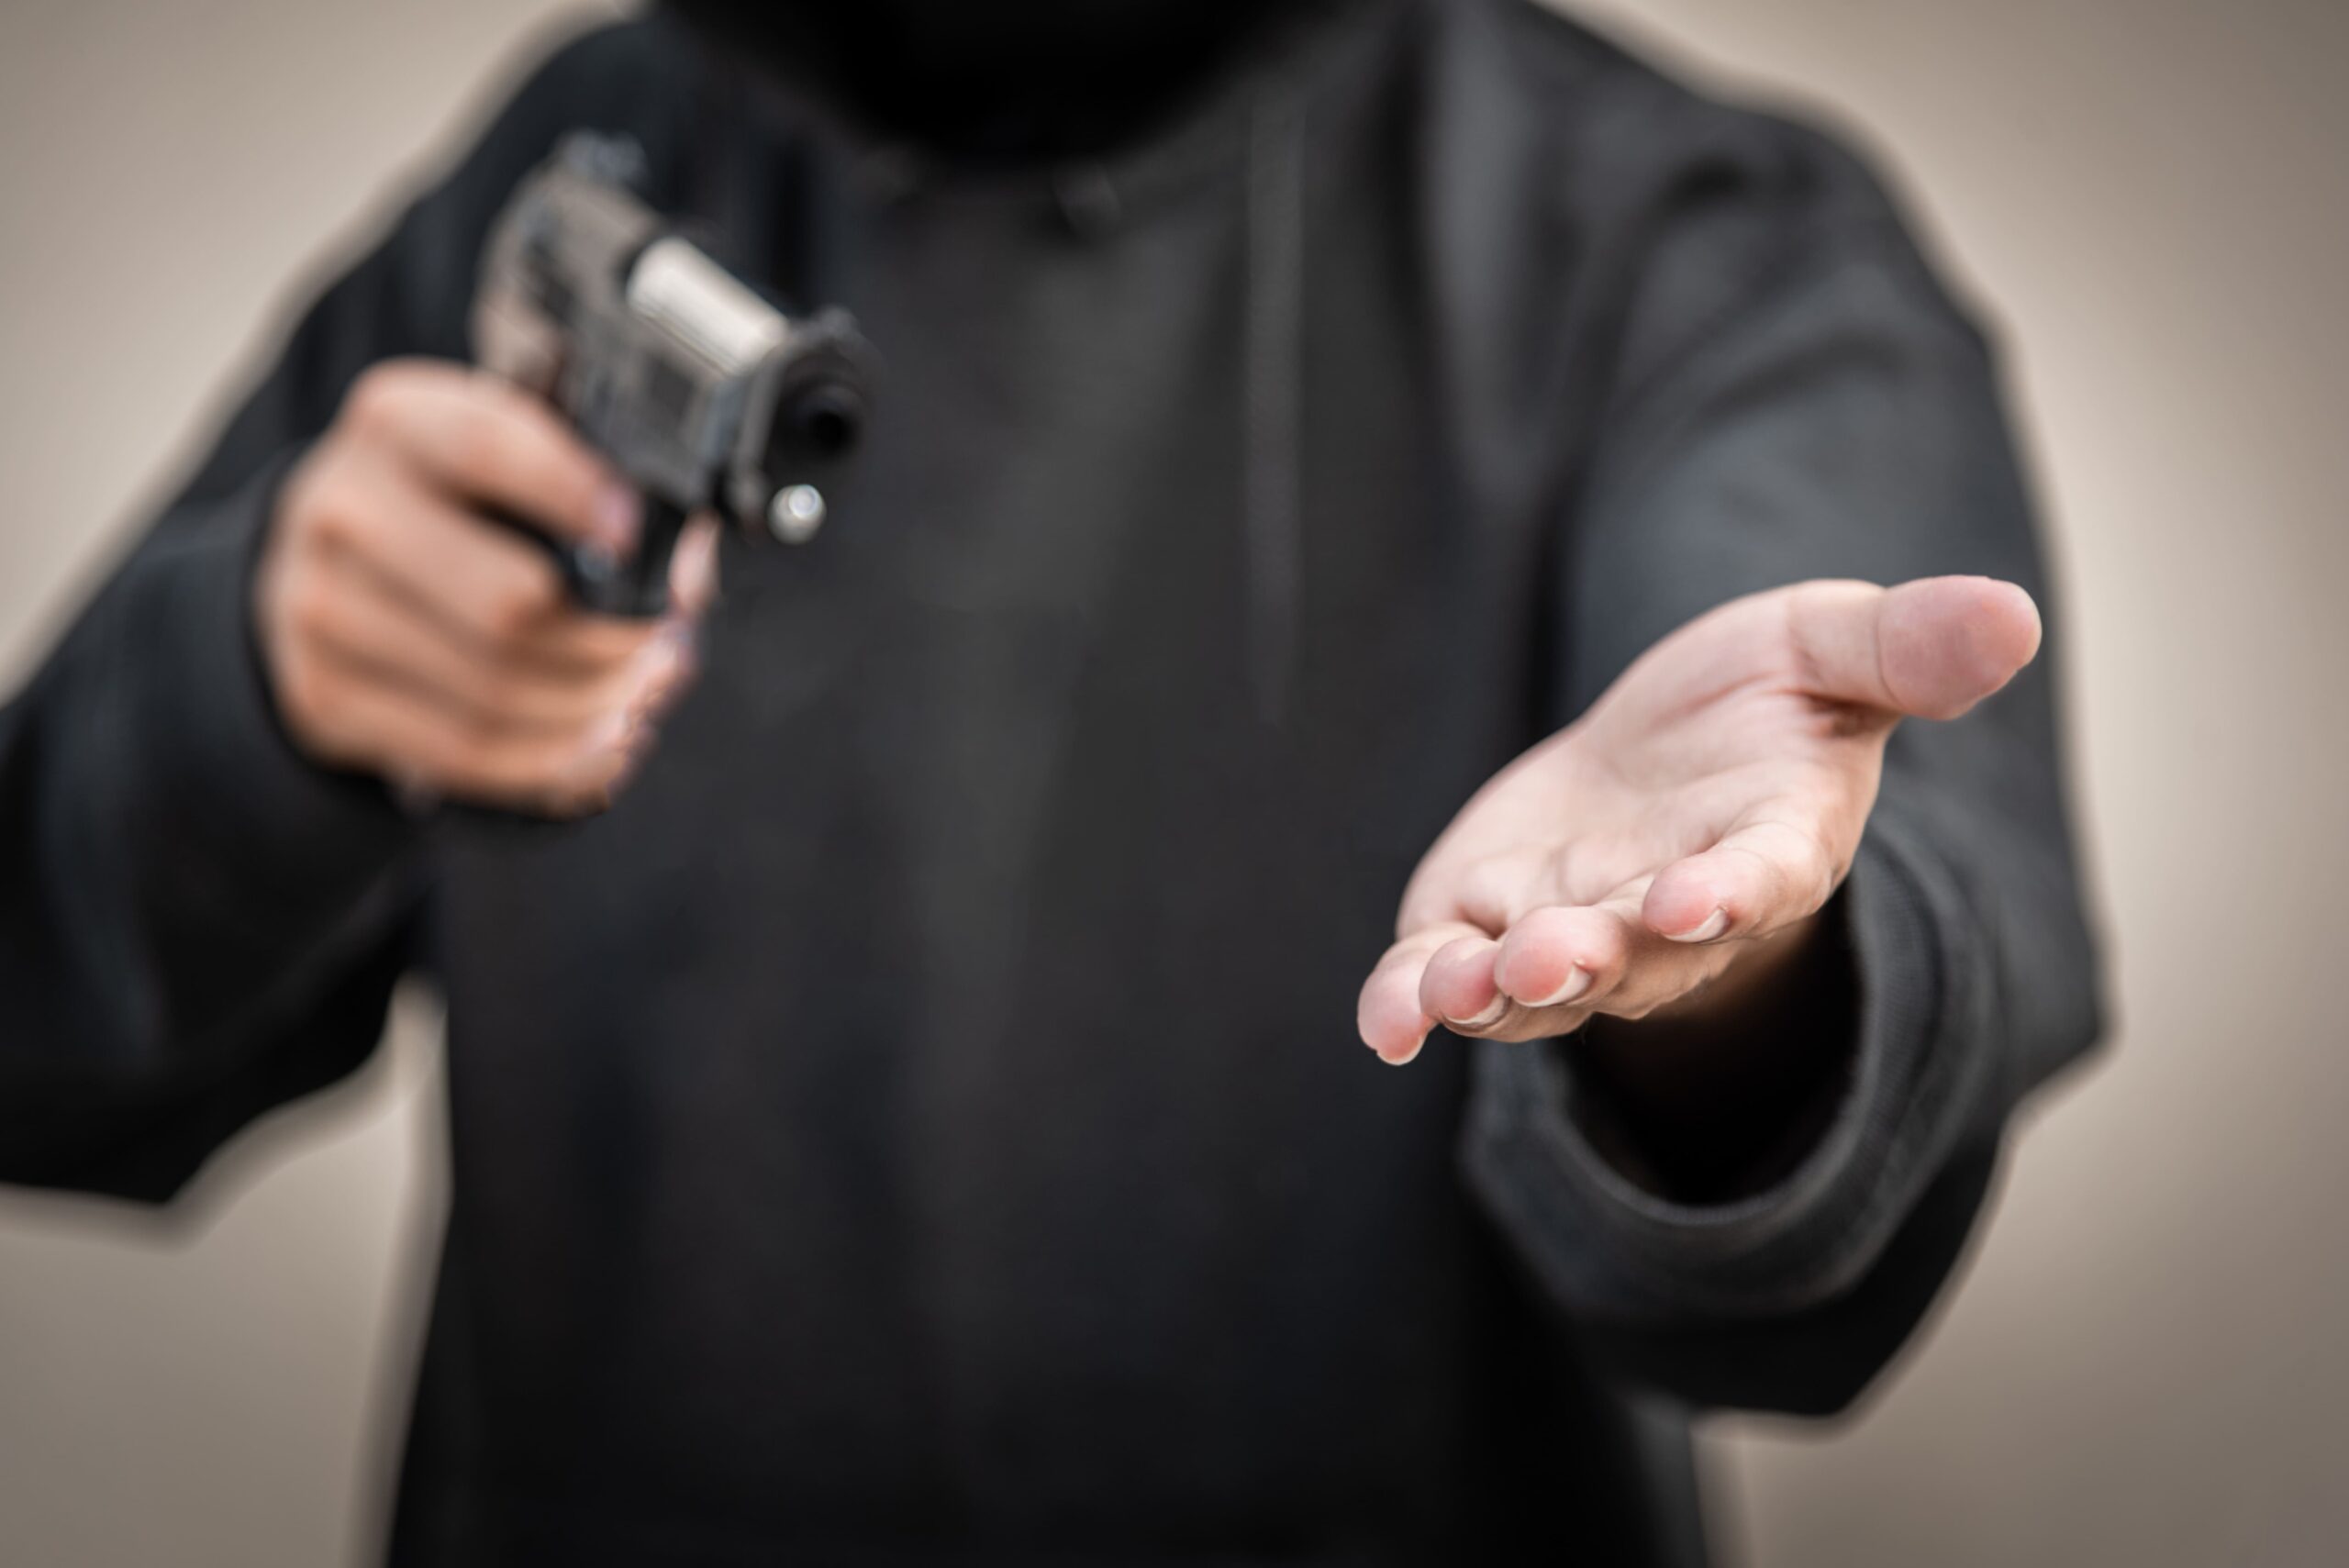 Man dressed in black threatens at gunpoint